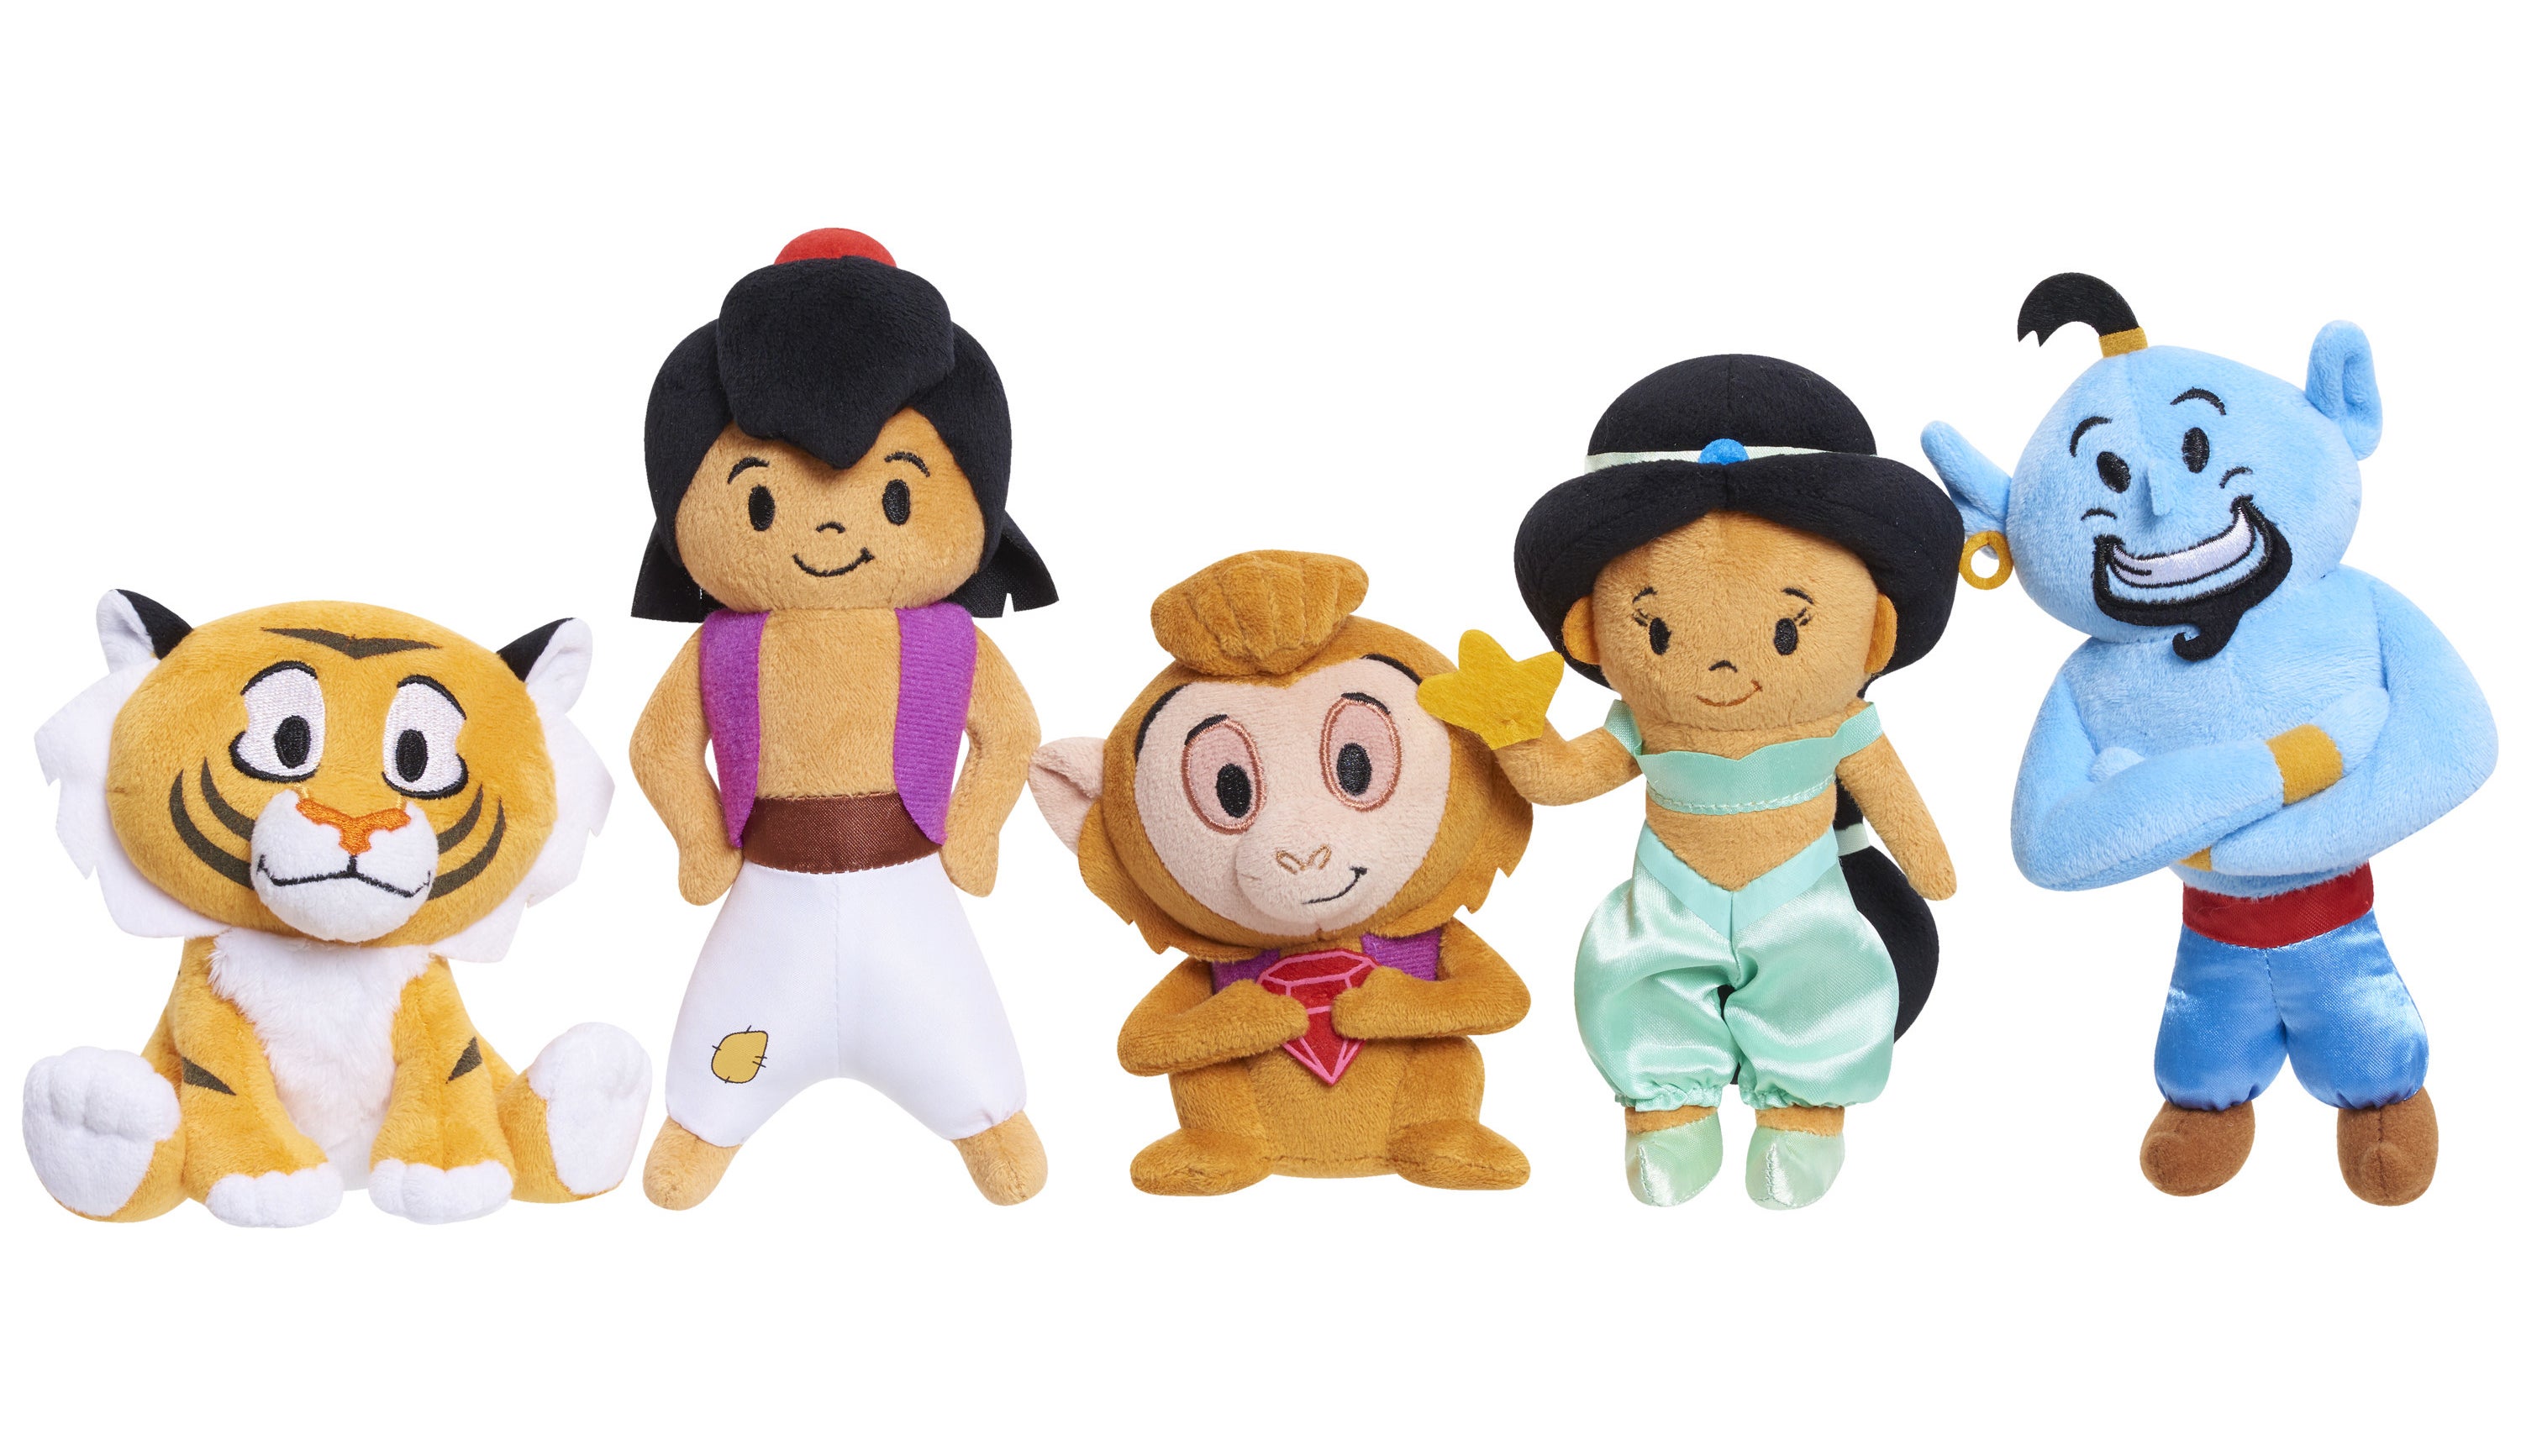 The plush toys, including  Aladdin, Jasmine, Genie, Abu, and Rajah